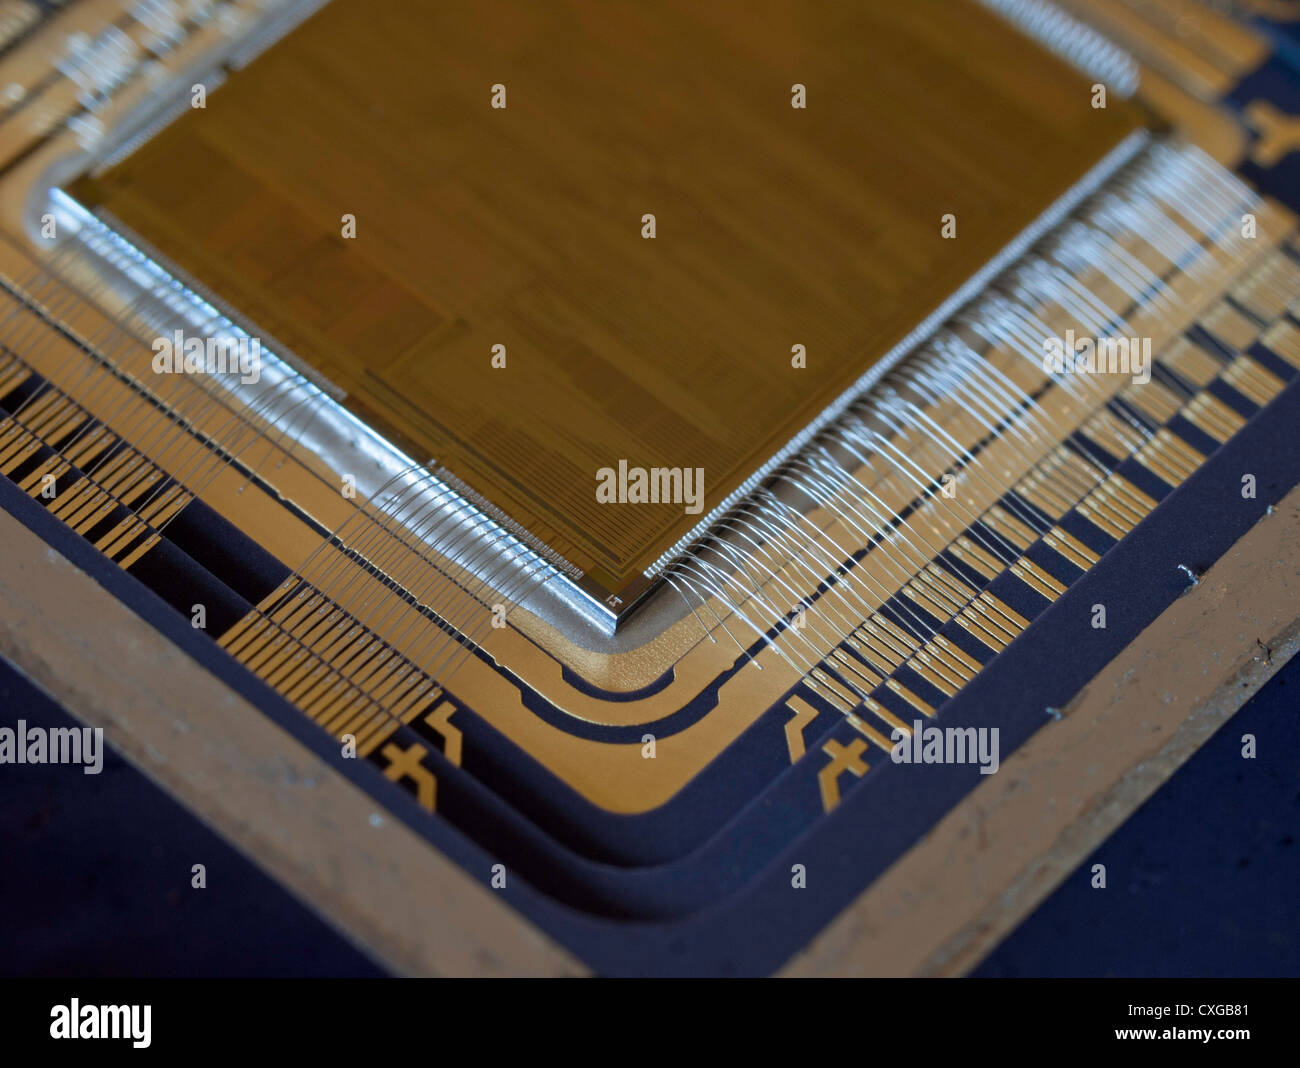 Intel Pentium 200 MHz MMX central processing unit core detail Stock Photo